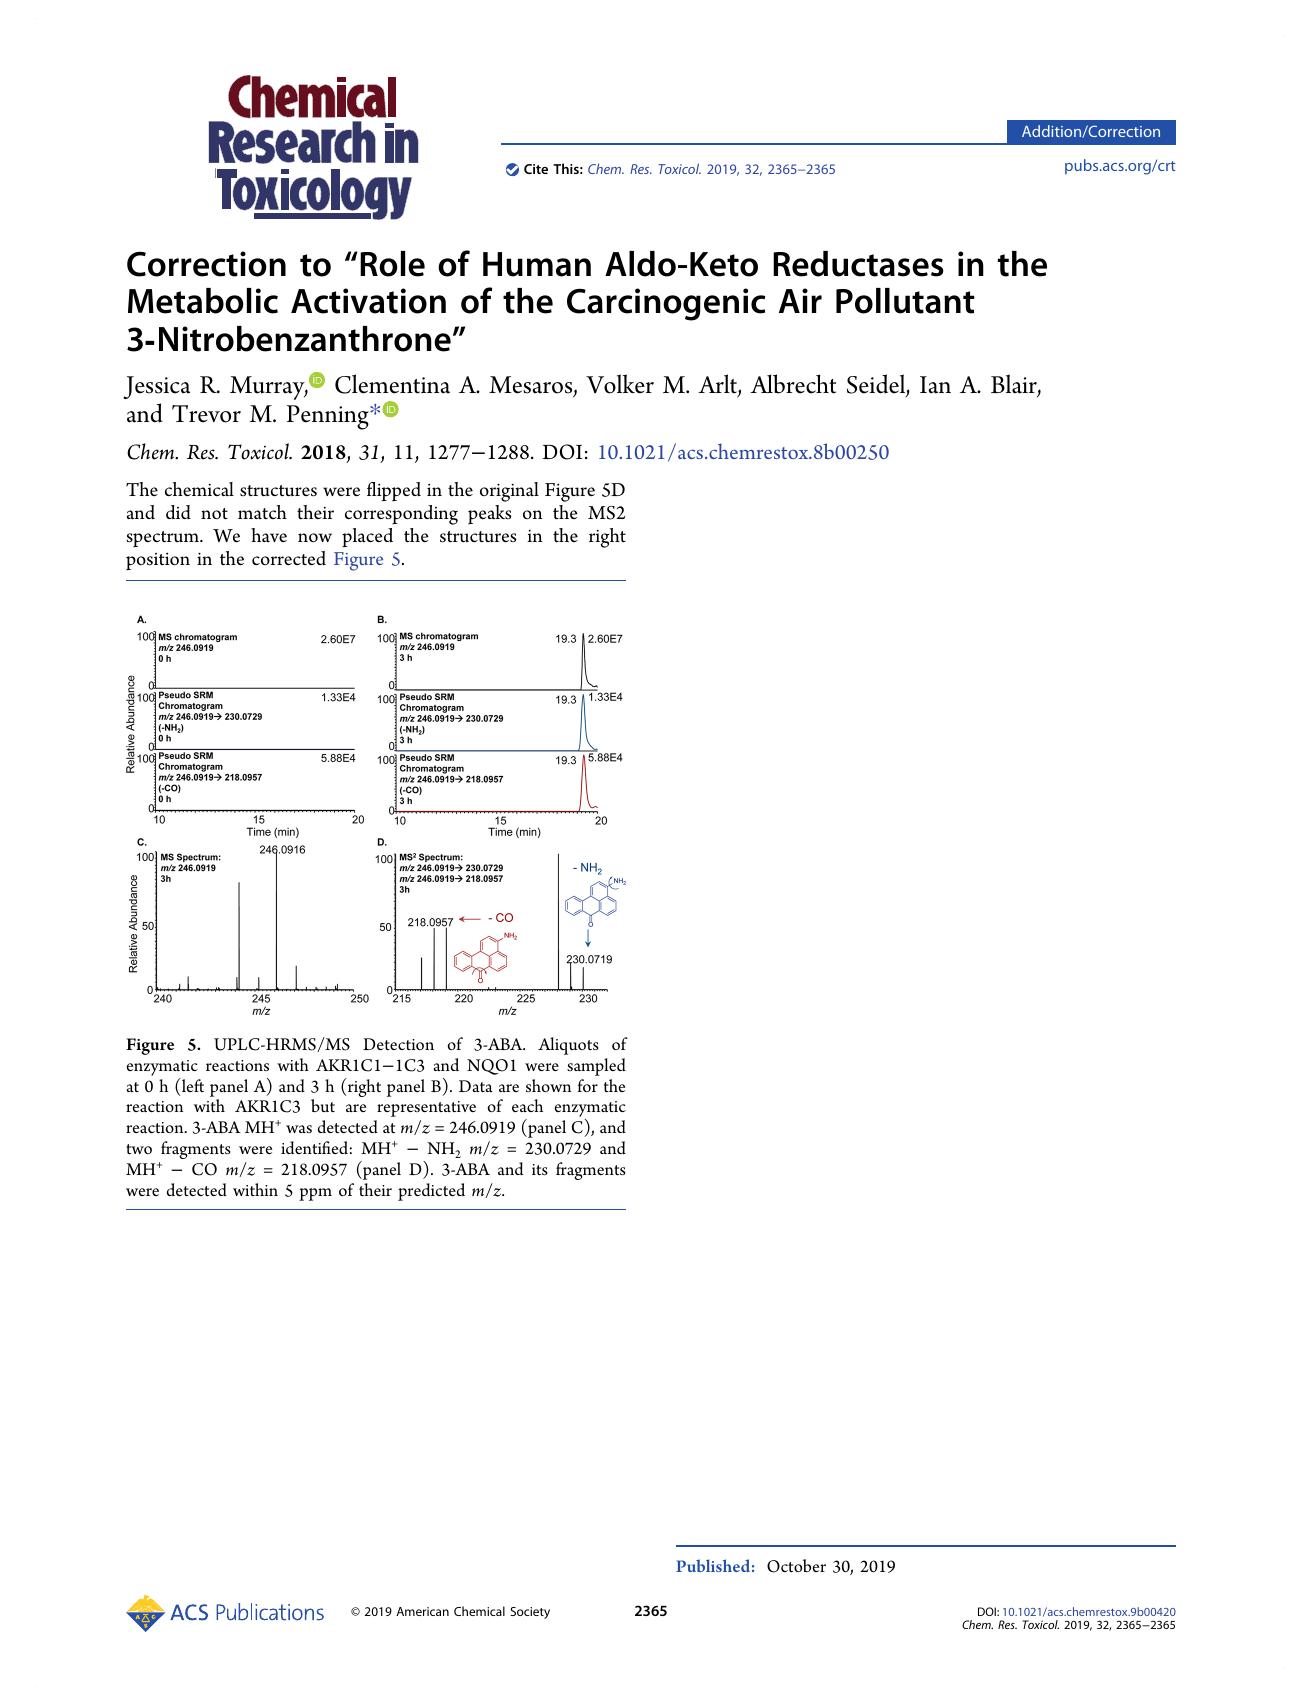 Correction to âRole of Human Aldo-Keto Reductases in the Metabolic Activation of the Carcinogenic Air Pollutant 3-Nitrobenzanthroneâ by unknow